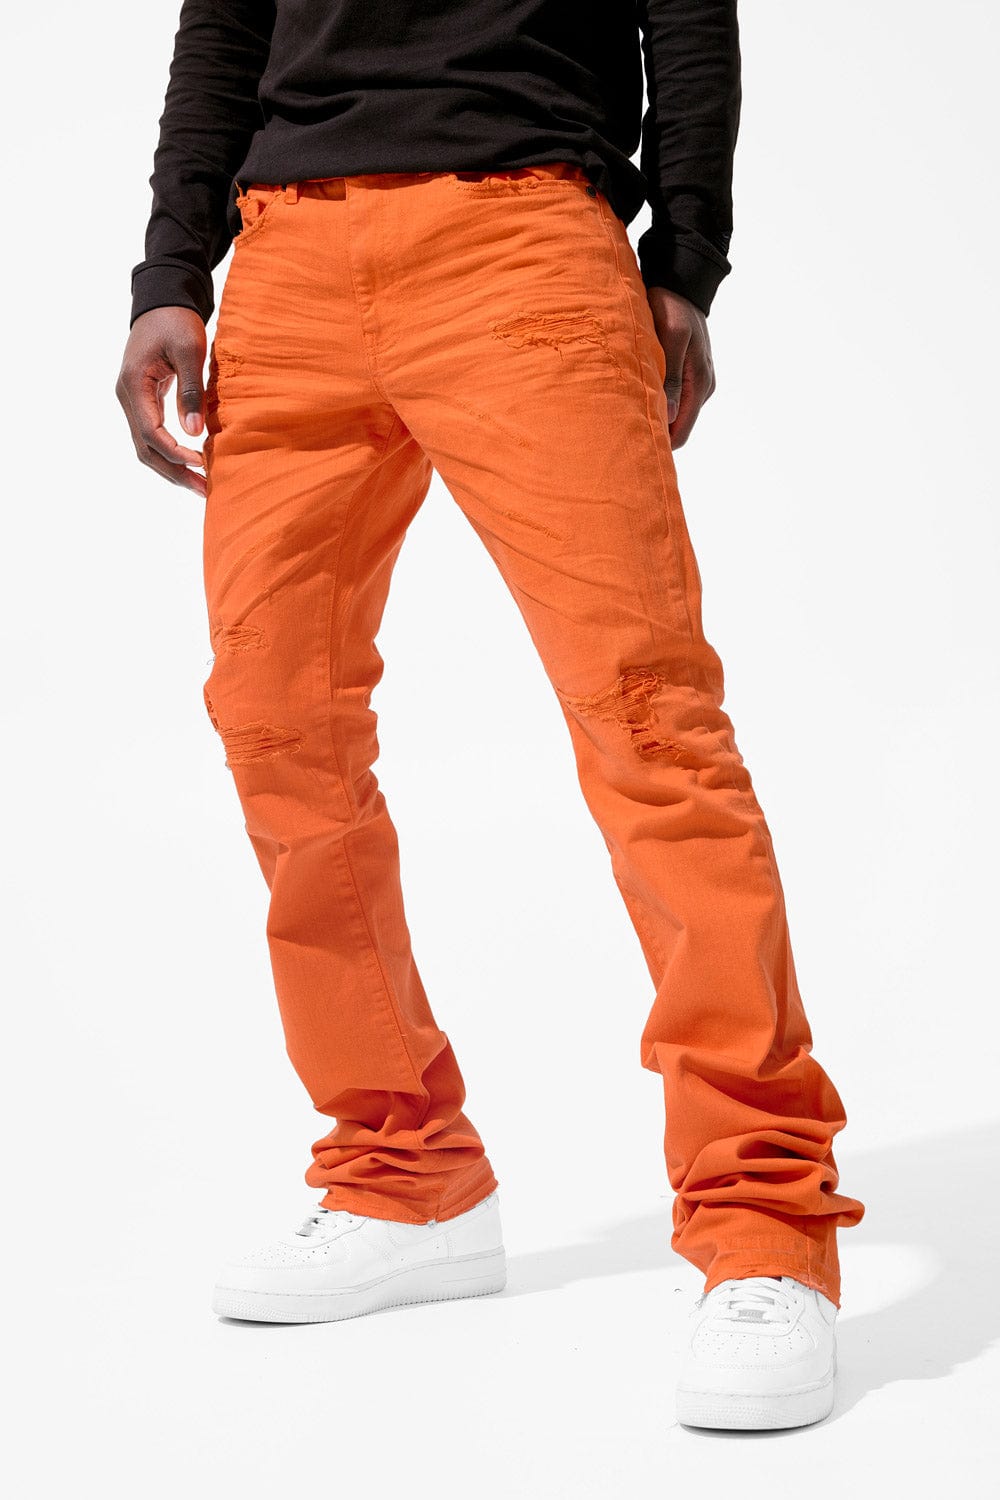 Jordan Craig Martin Stacked - Tribeca Twill Pants Orange / 30